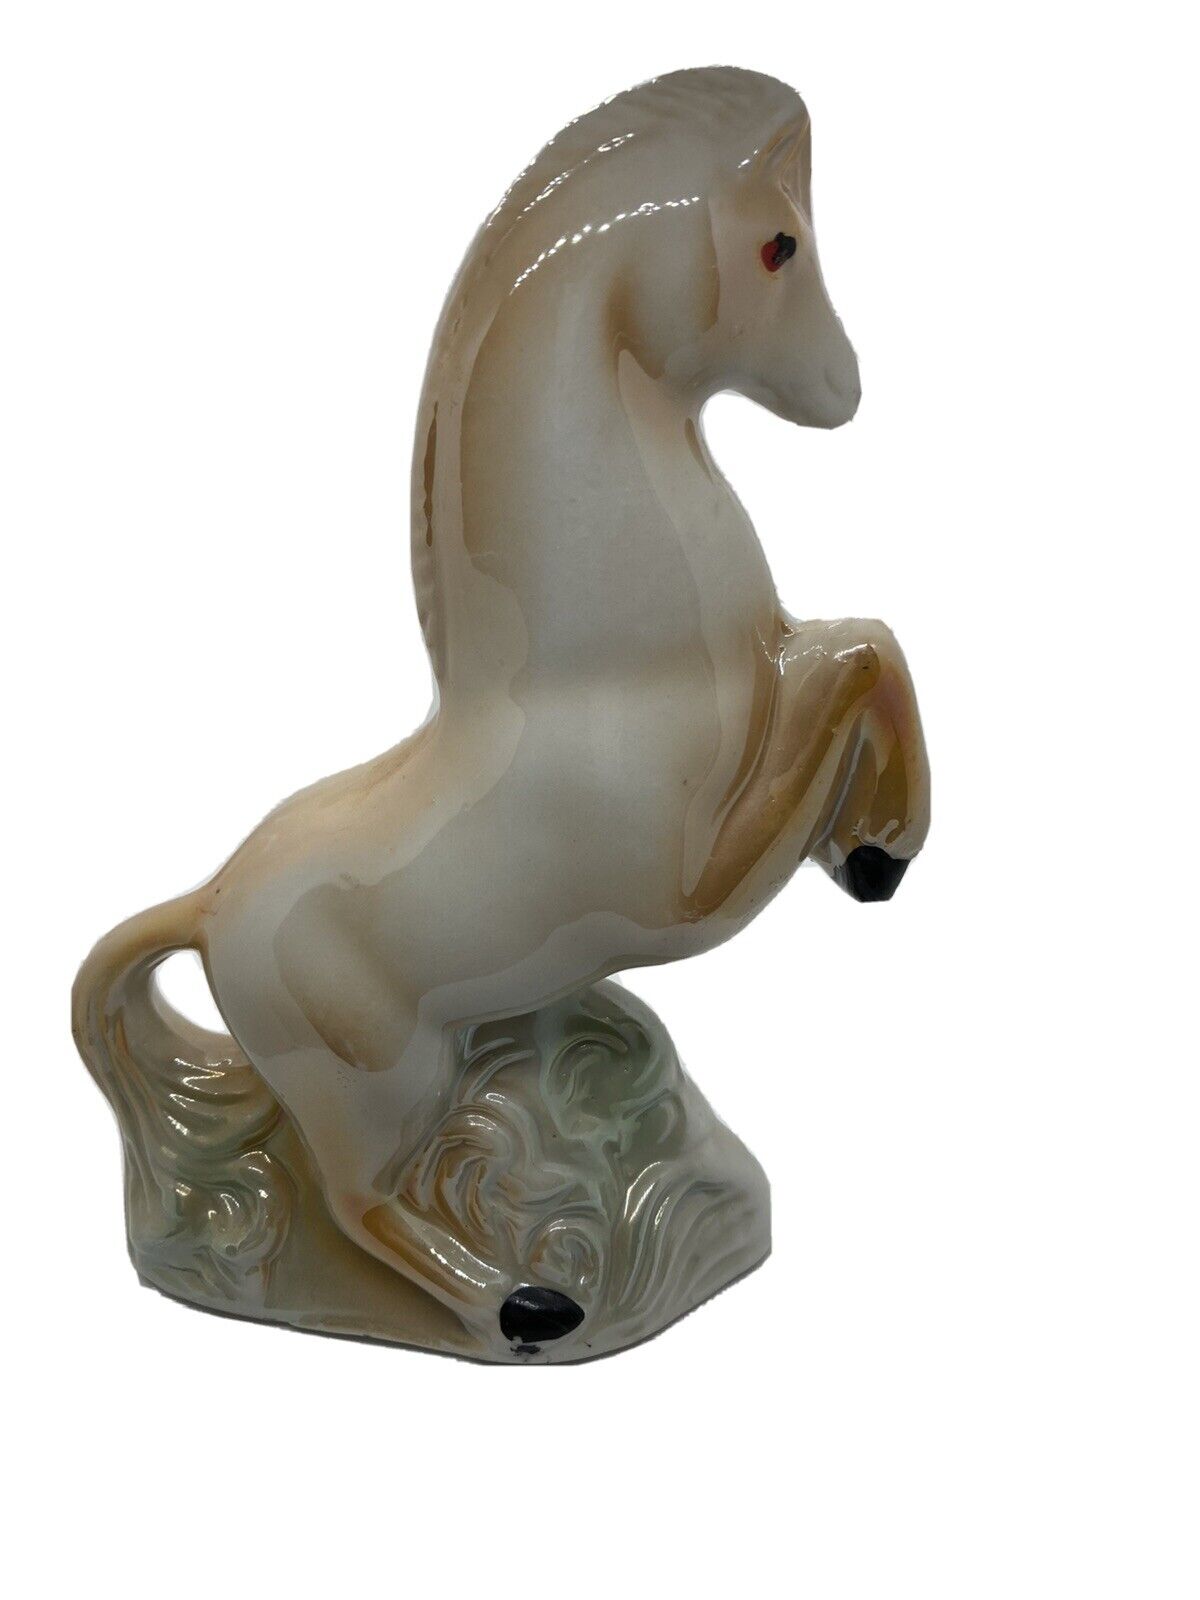 Vintage Rearing Horse Figurine Glazed Made in Brazel